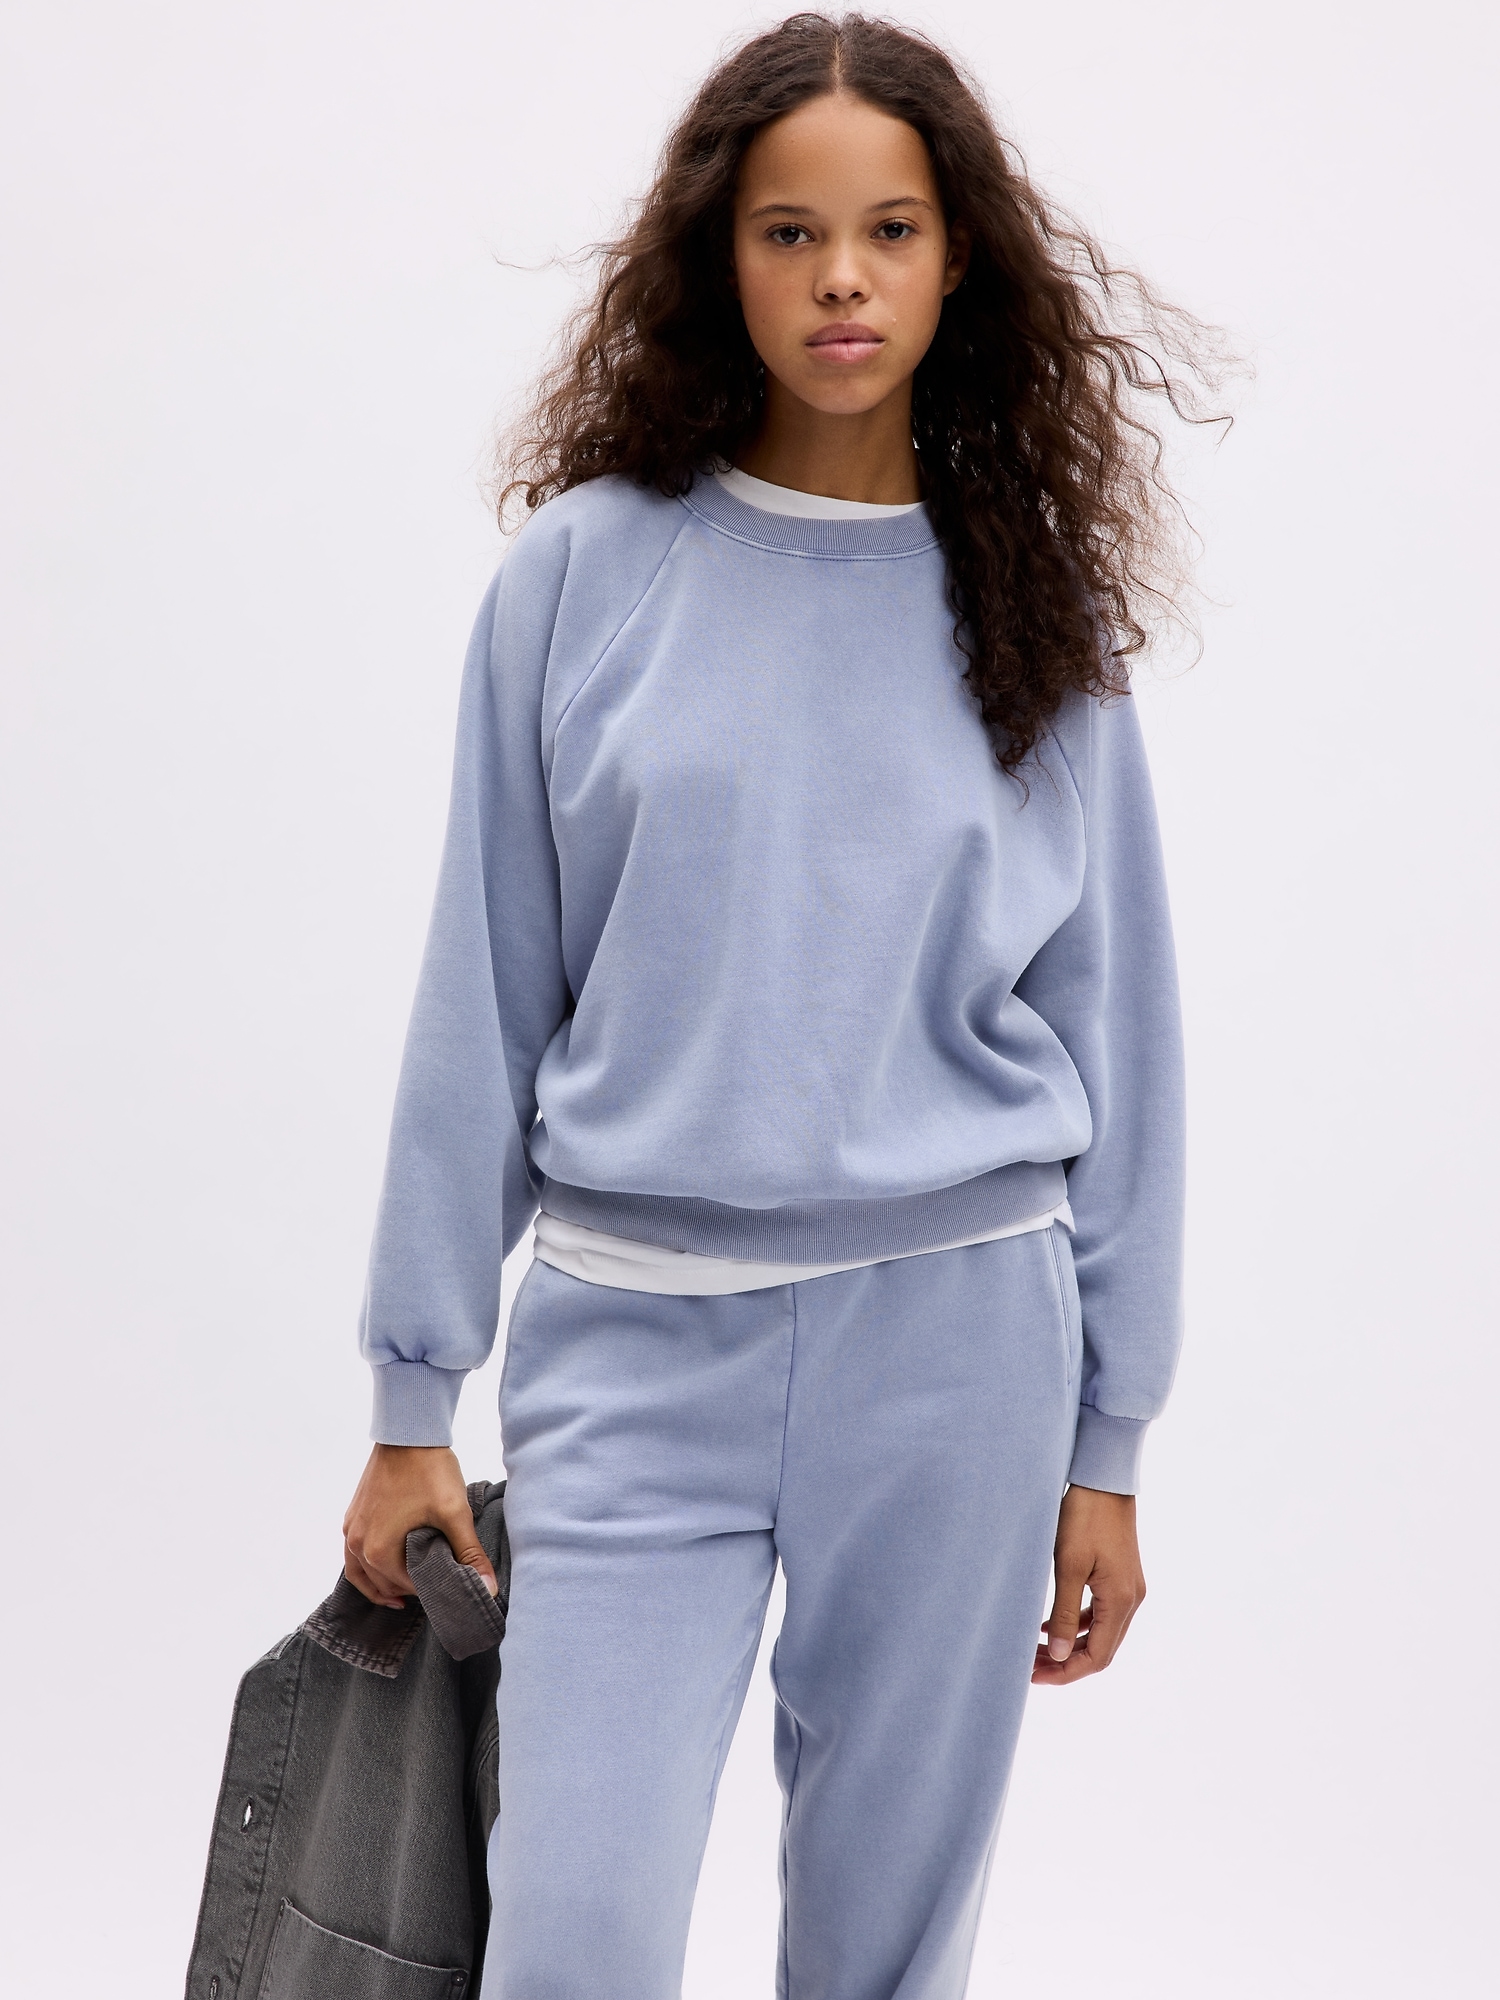 Phenomenally Soft Garment Dye Jogger Sweatpants (Light Blue)